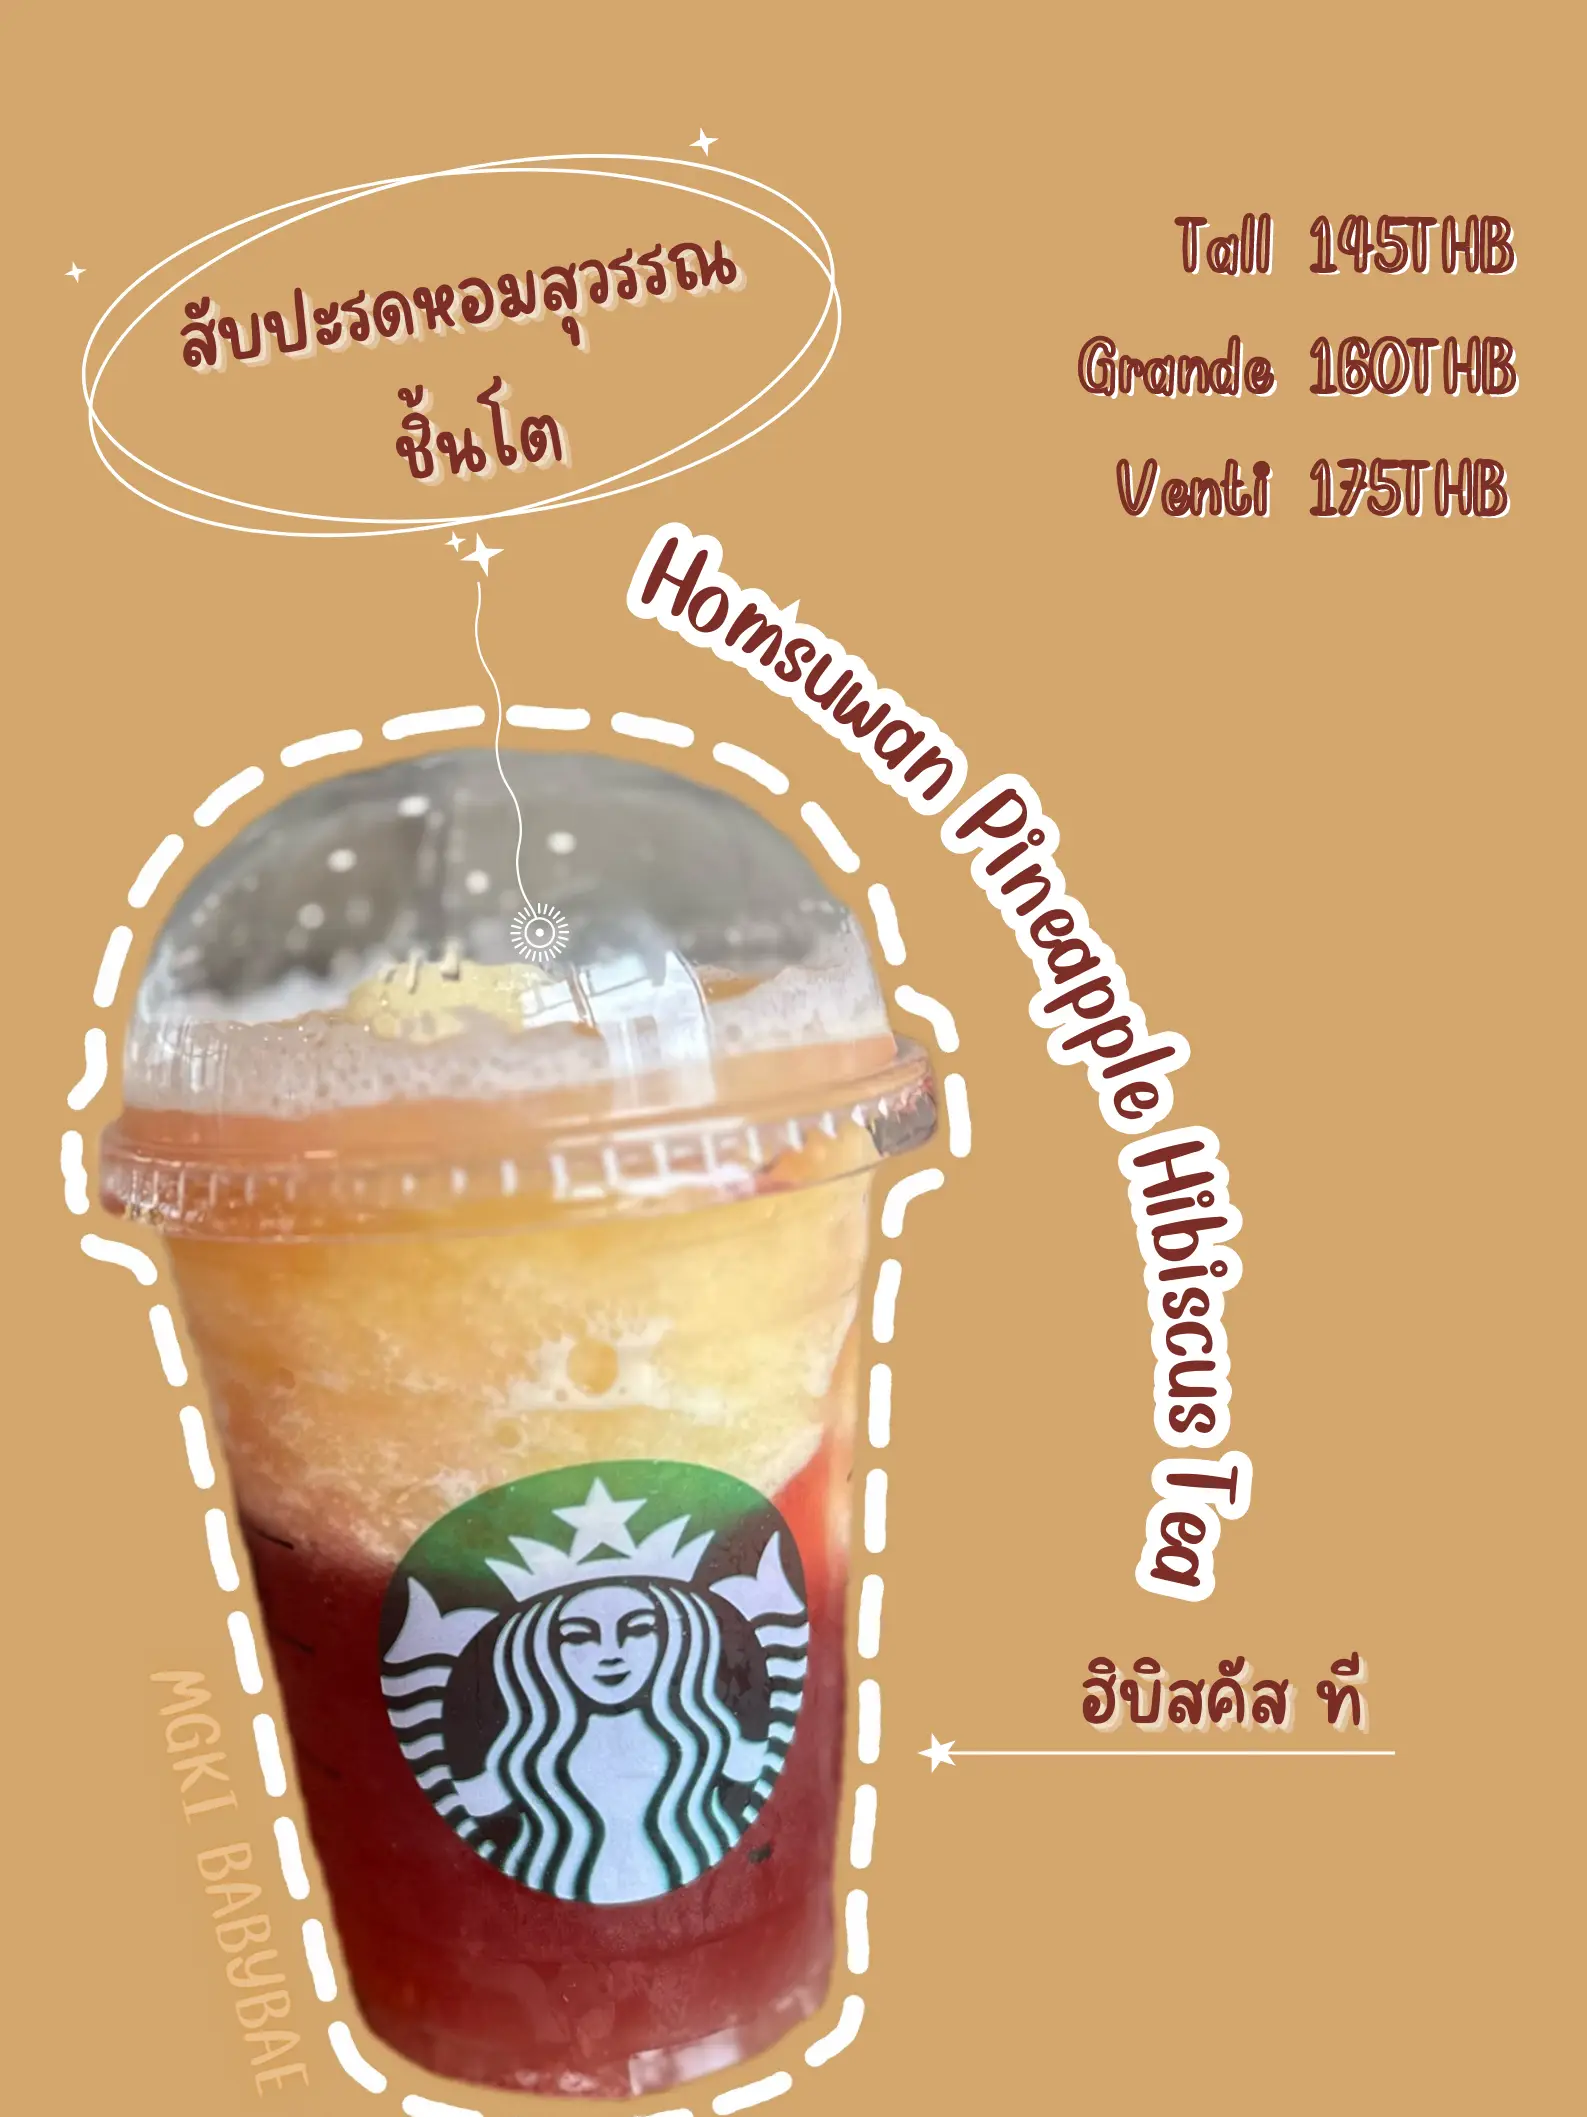 Iced Caramel Macchiato (Tall) In South Korea Starbucks